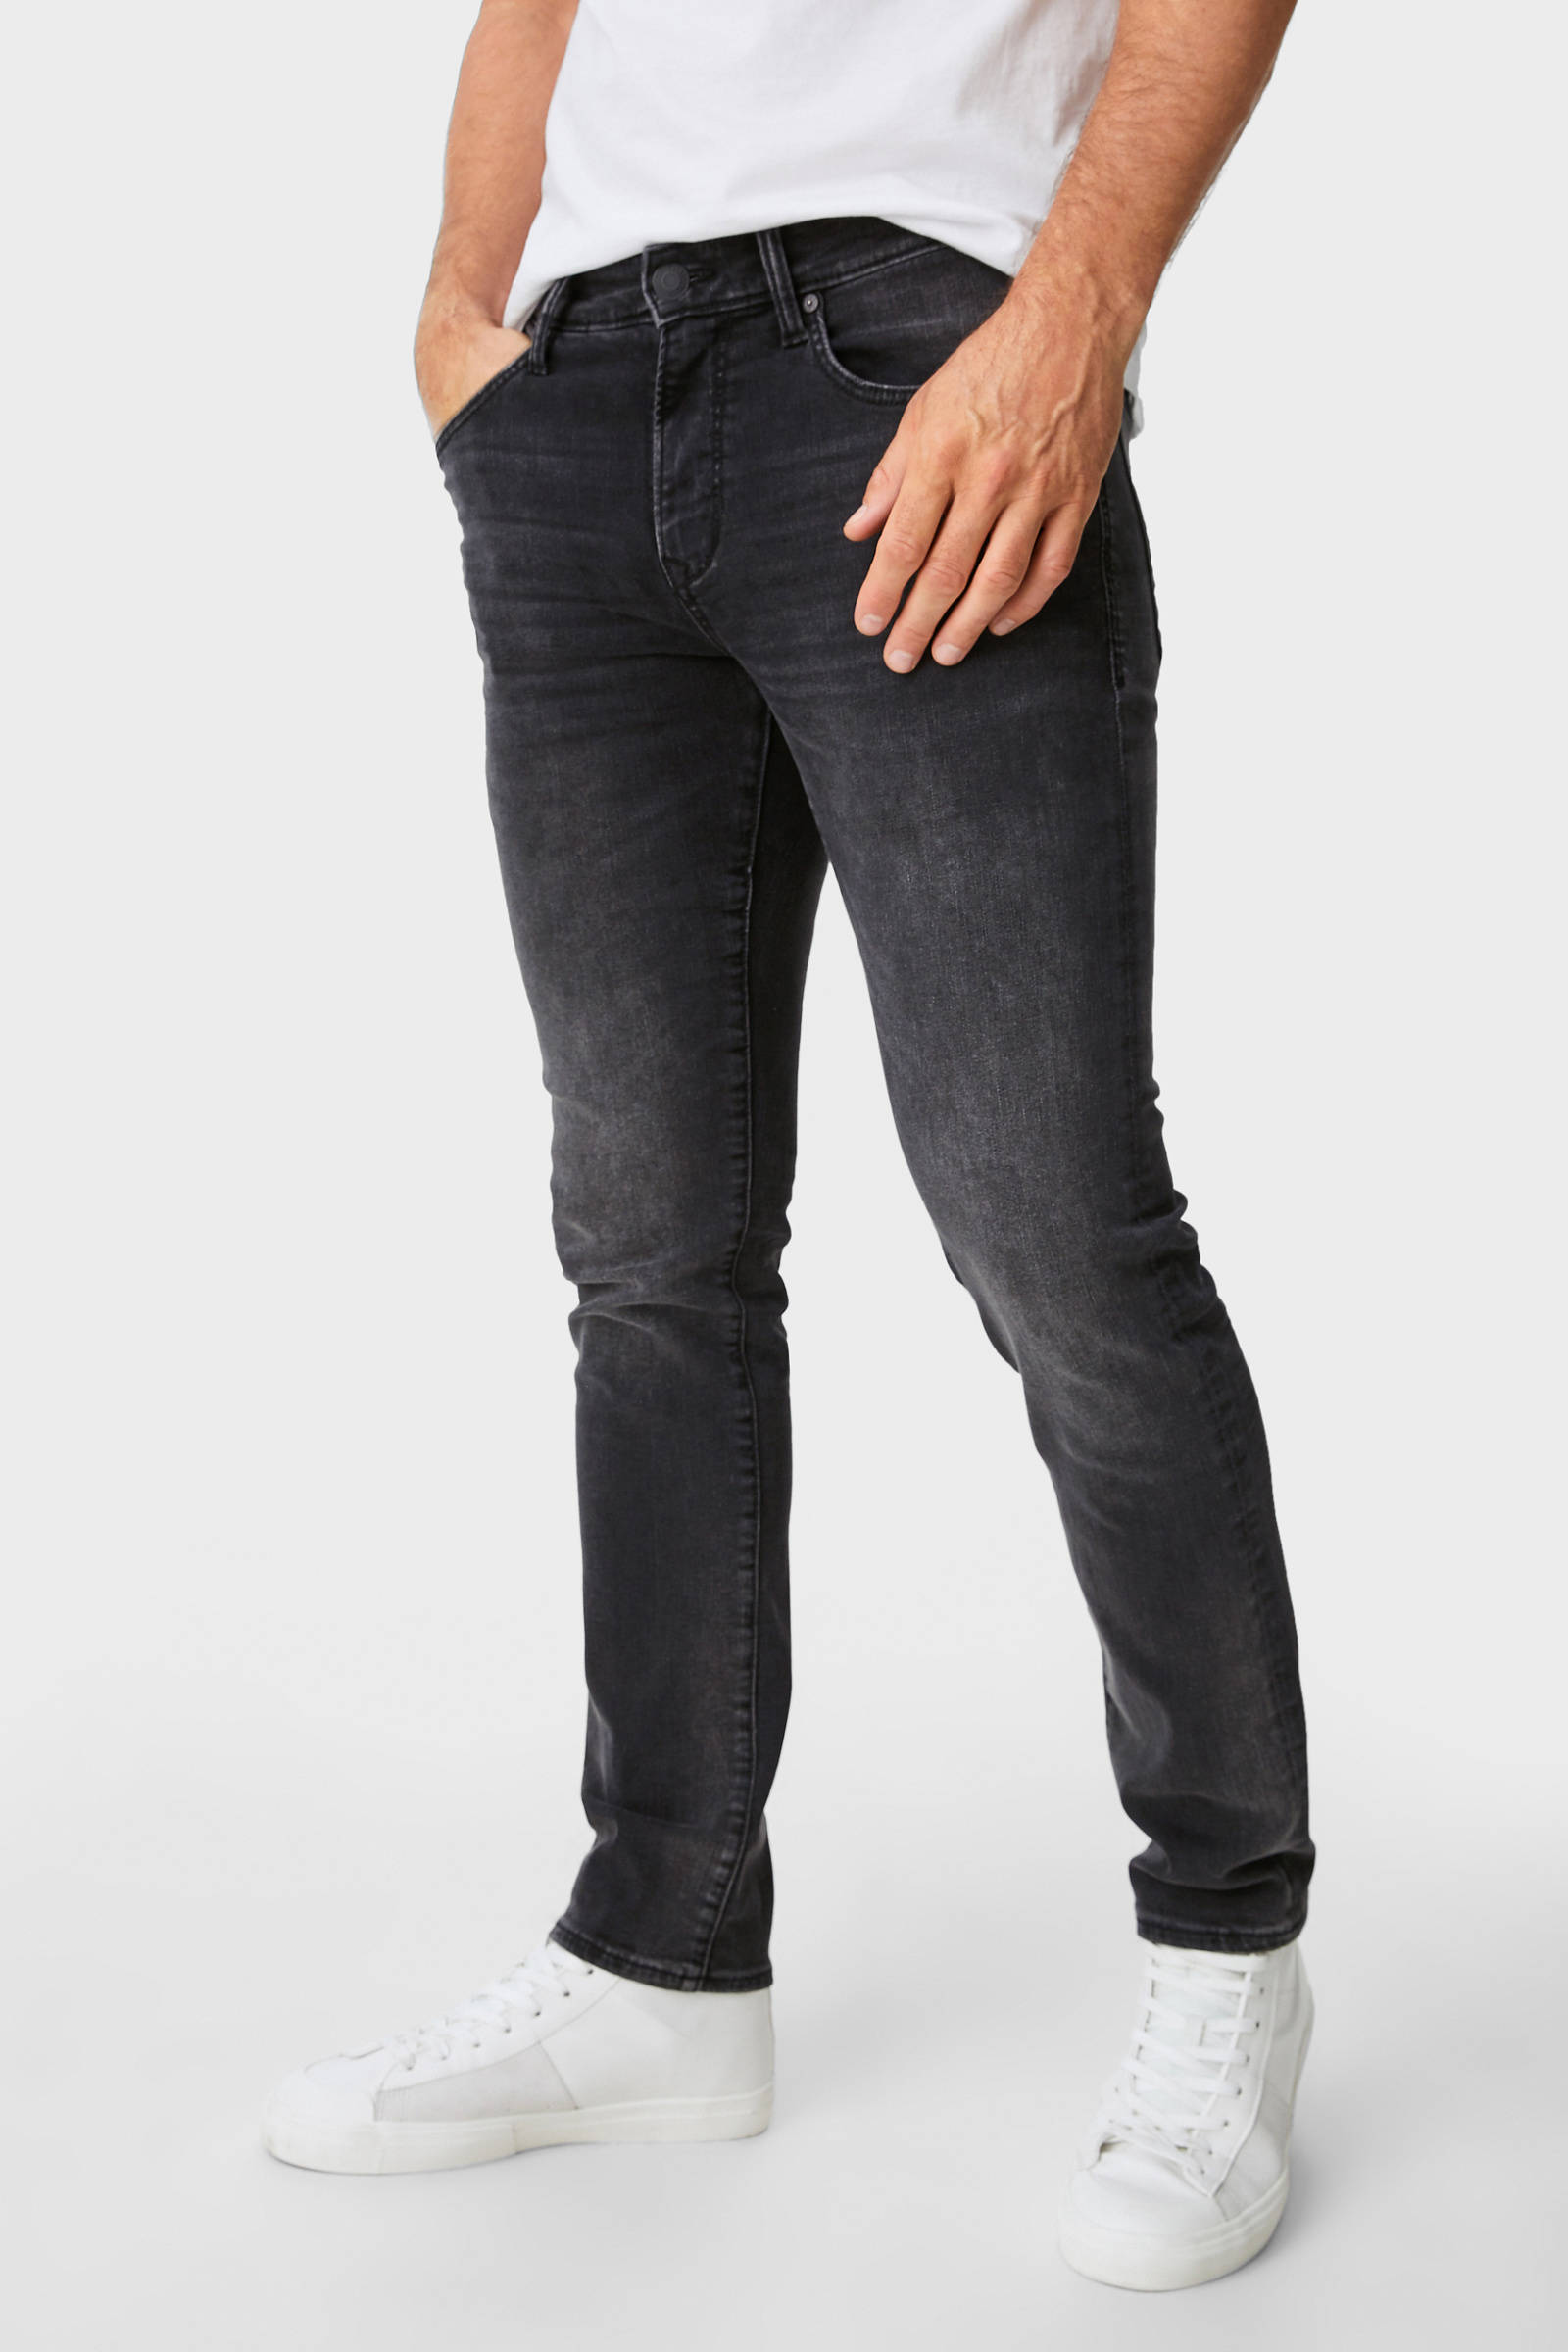 Obsessie Plagen duidelijk Thermo Jeans Heren C&a Hot Sale, SAVE 30% - loutzenhiserfuneralhomes.com